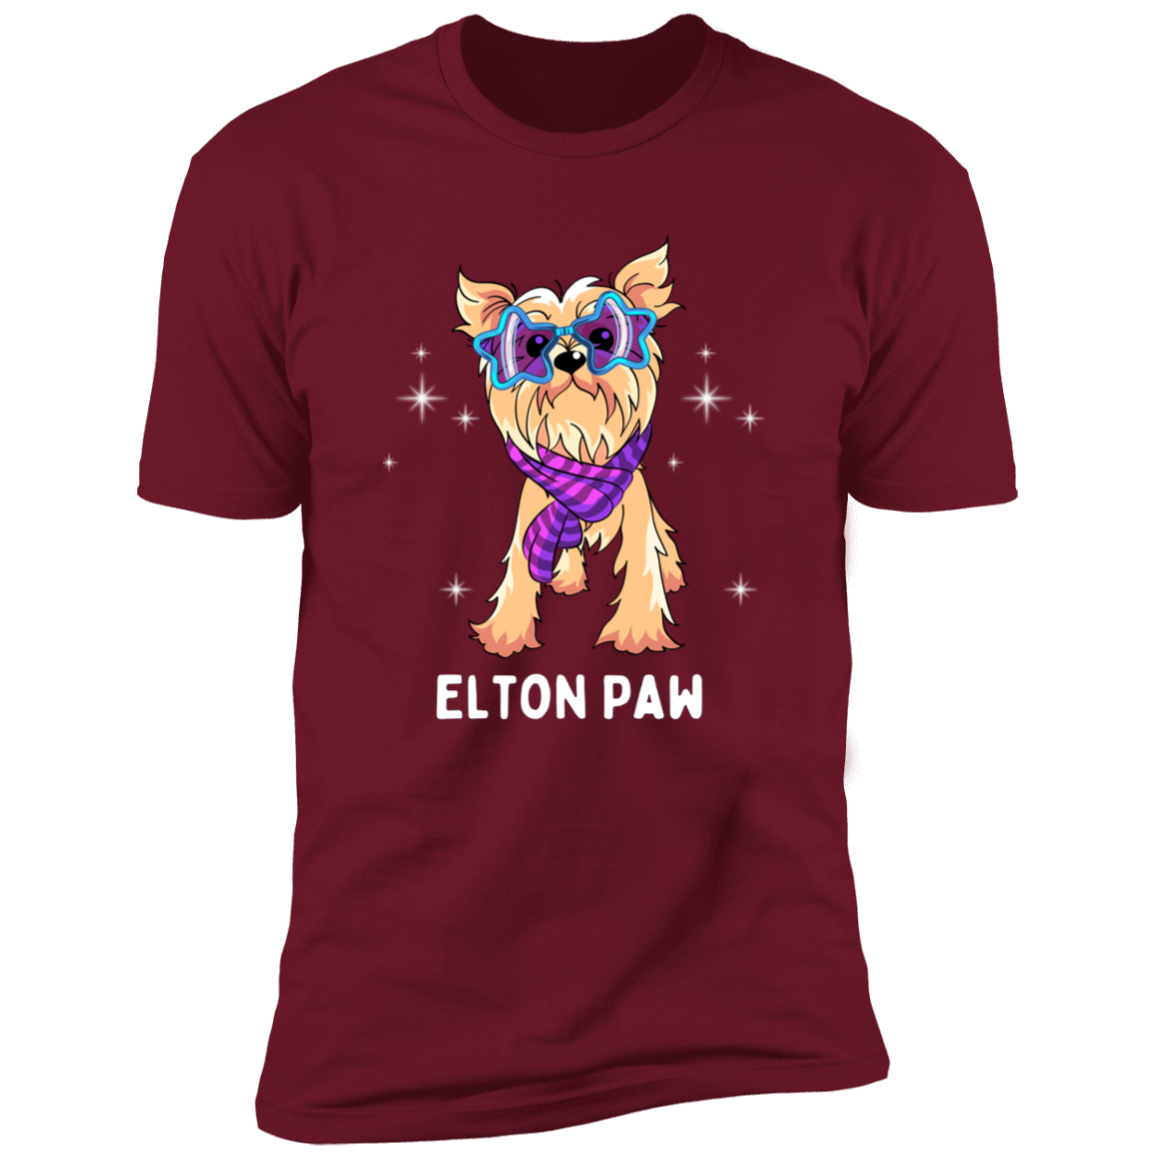 Elton Paw Dog Shirt, Funny dog shirt for humans, Dog mom shirt, dog dad shirt, in cardinal red